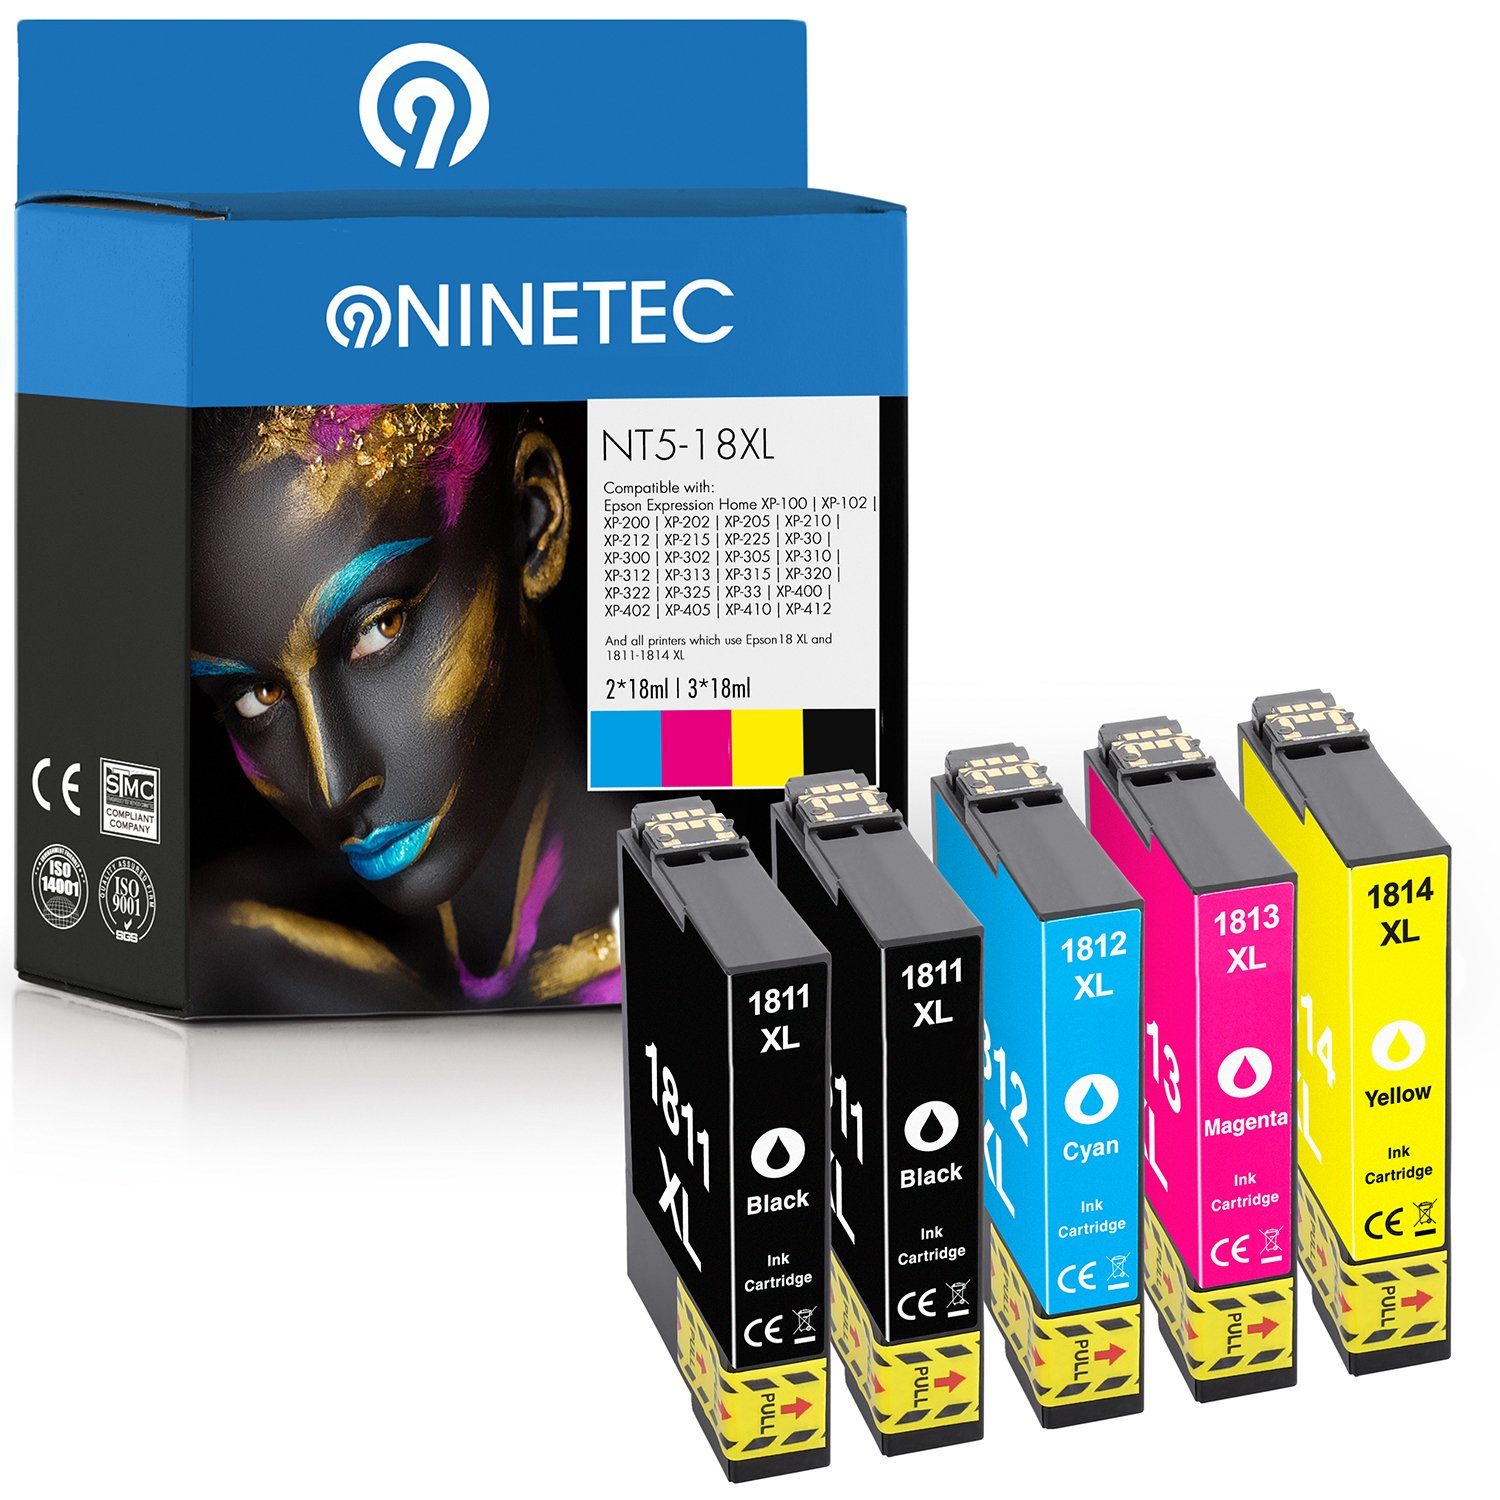 NINETEC 5er Set ersetzt Epson T1811-T1814 Tintenpatrone